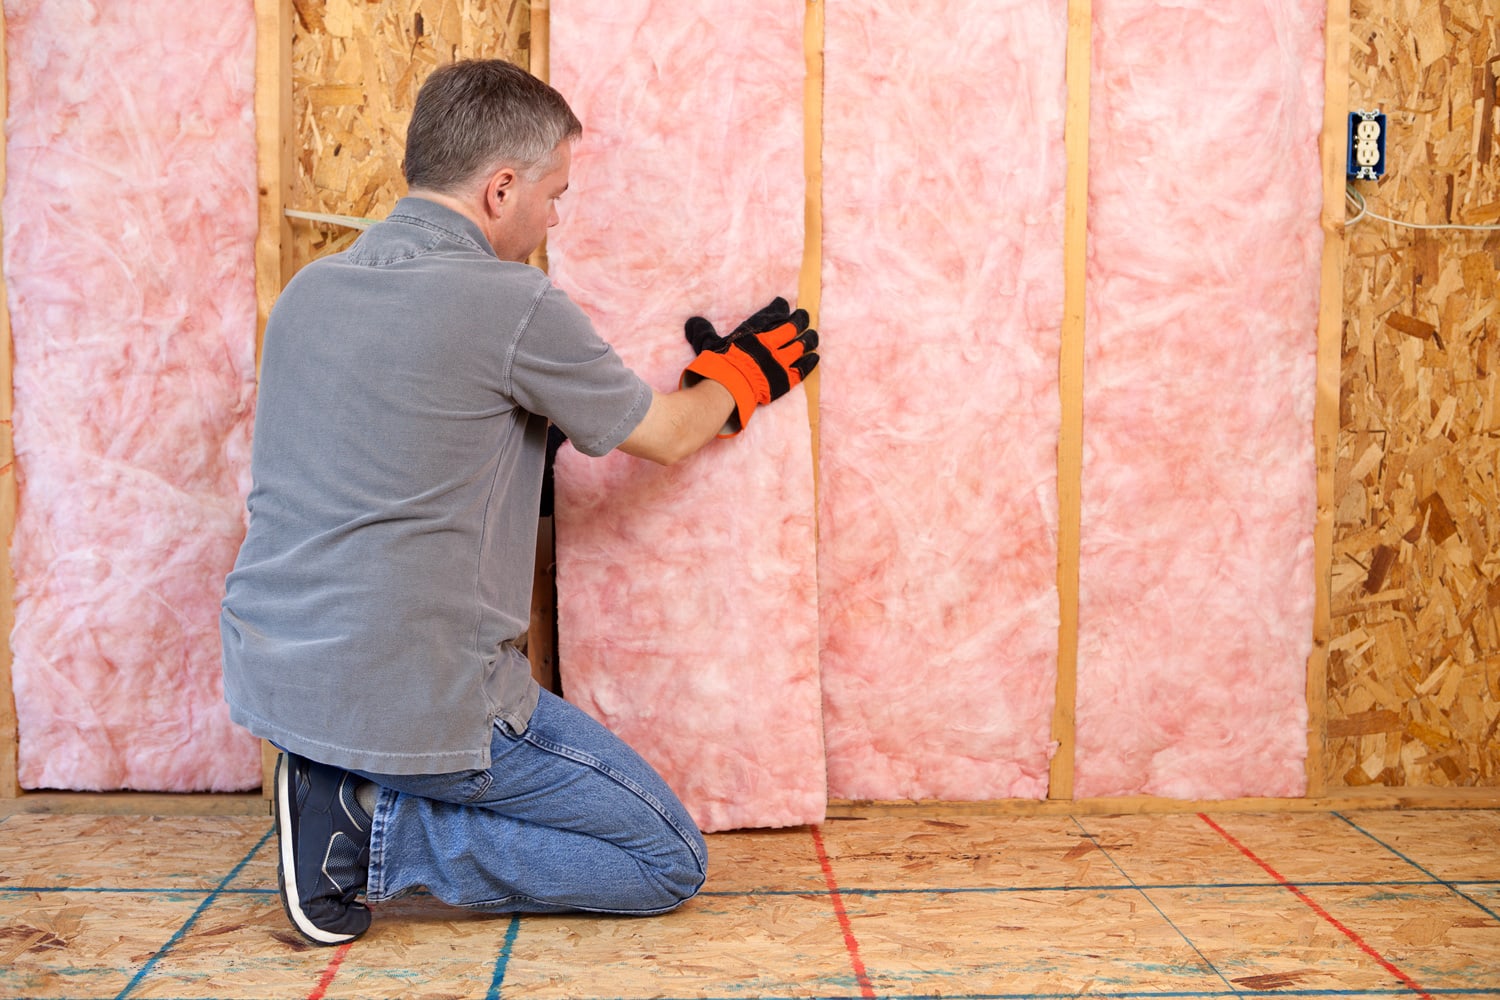 Man installing fiberglass insulation in the wall.